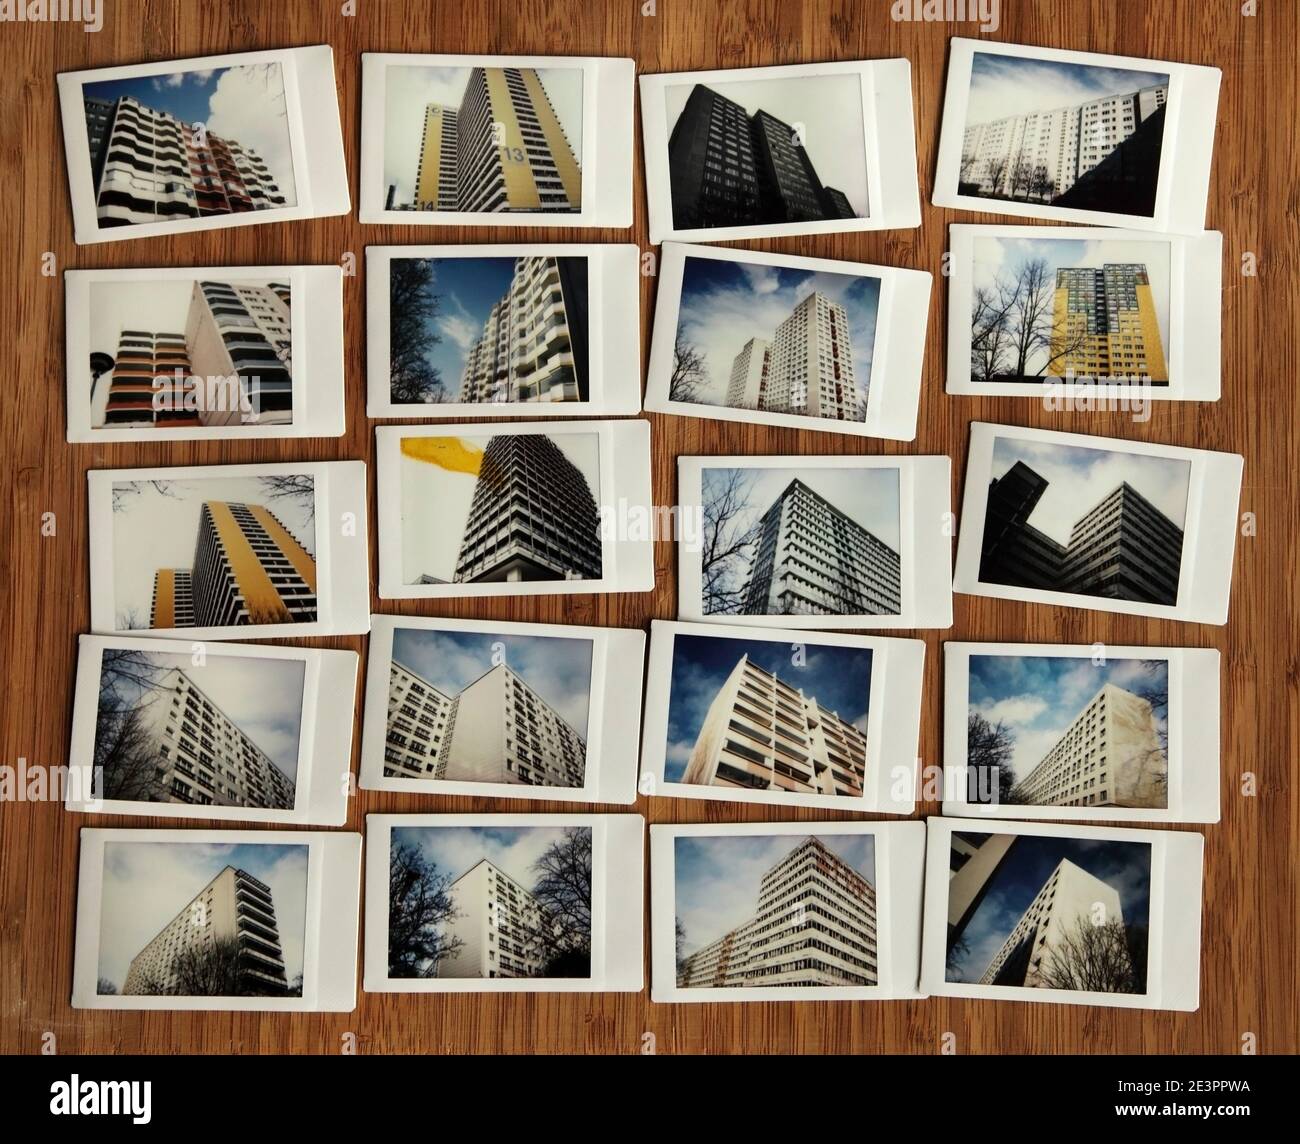 Fujifilm Instax instant photographs of apartment blocks in Berlin, Germany  Stock Photo - Alamy